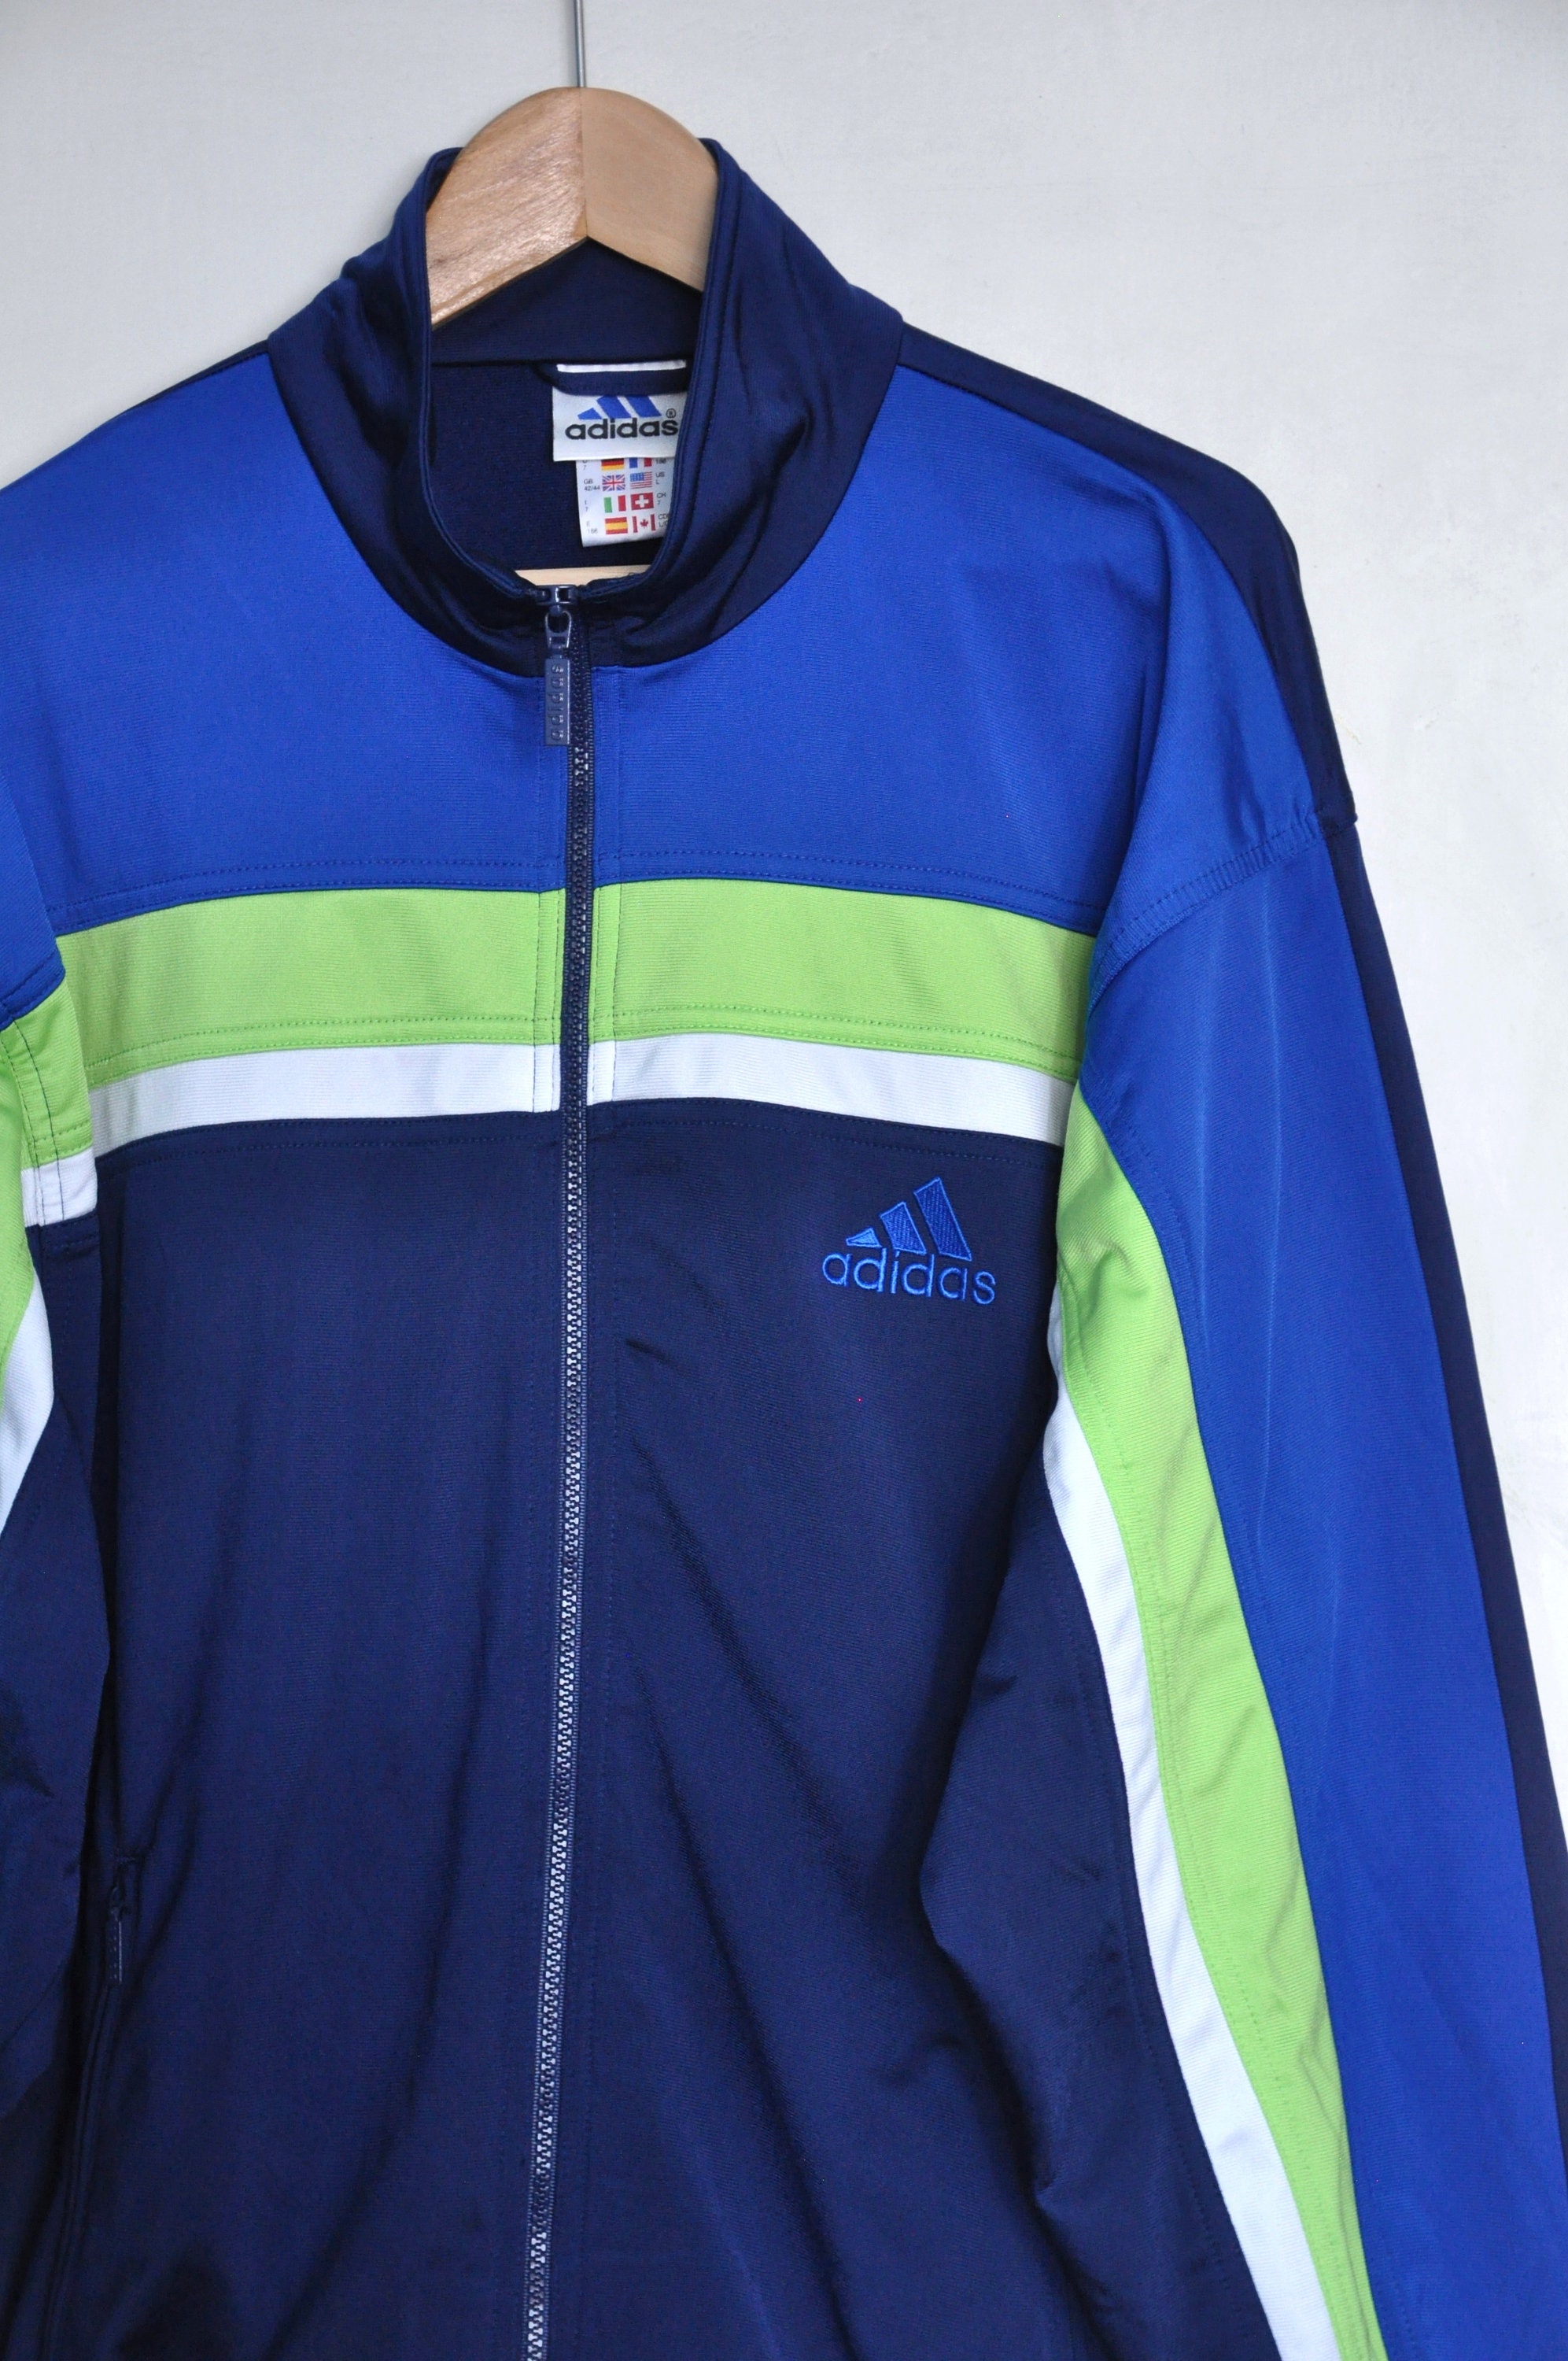 Vintage 90s Adidas Dark Blue and Neon Green Jacket Adidas | Etsy